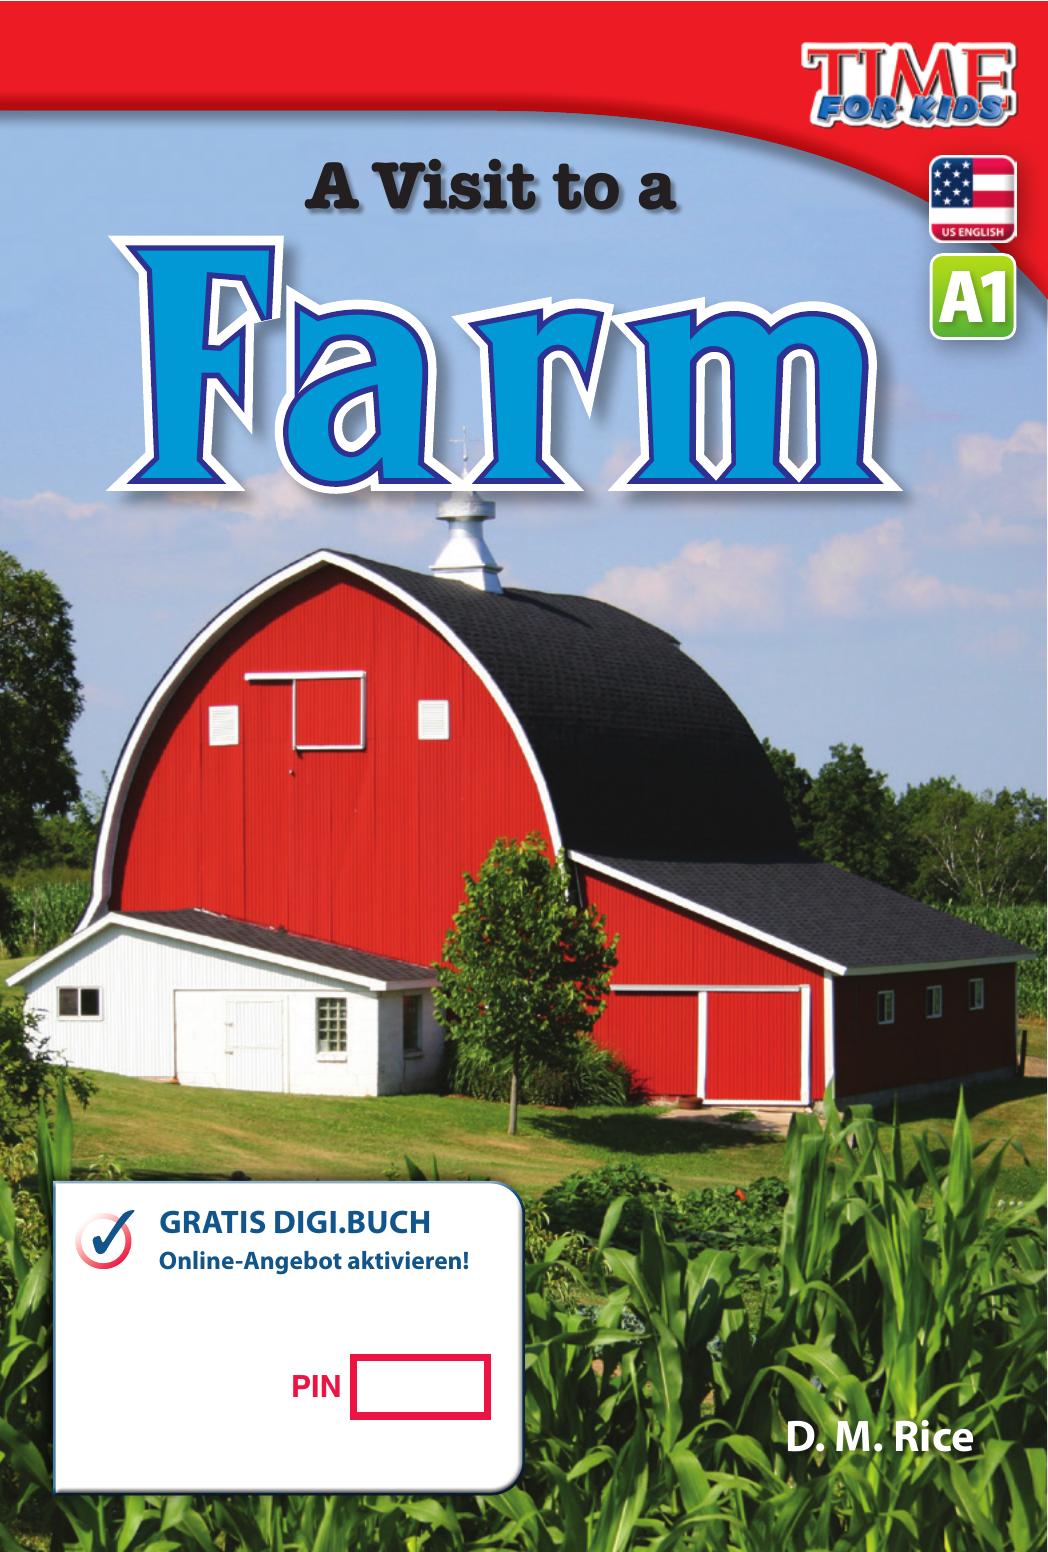 A1 – A Visit to a Farm